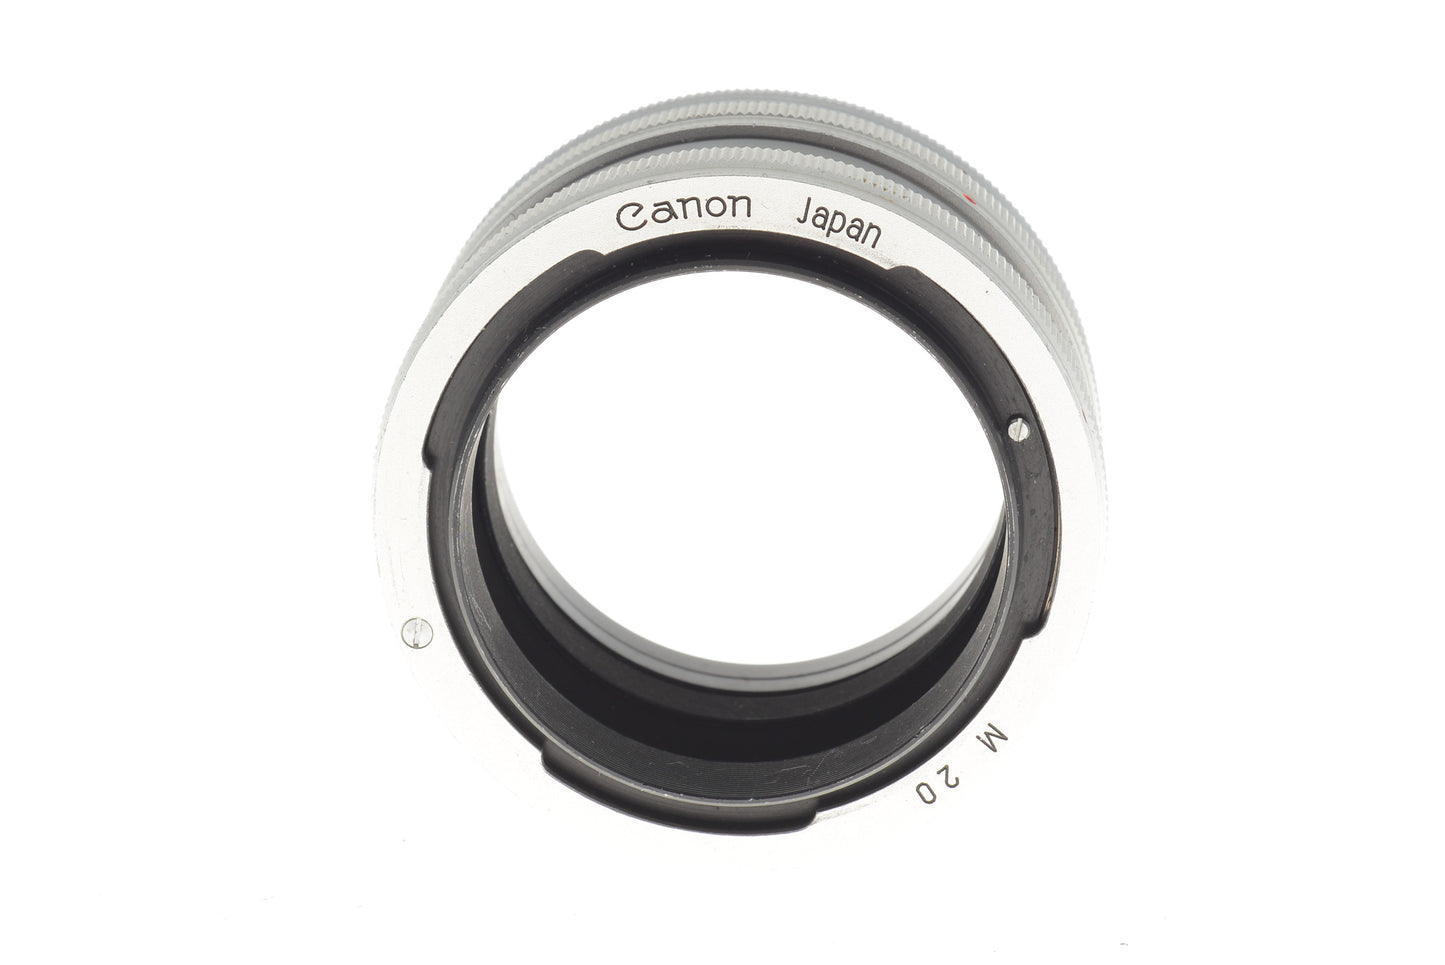 Canon Extension Tube M Set